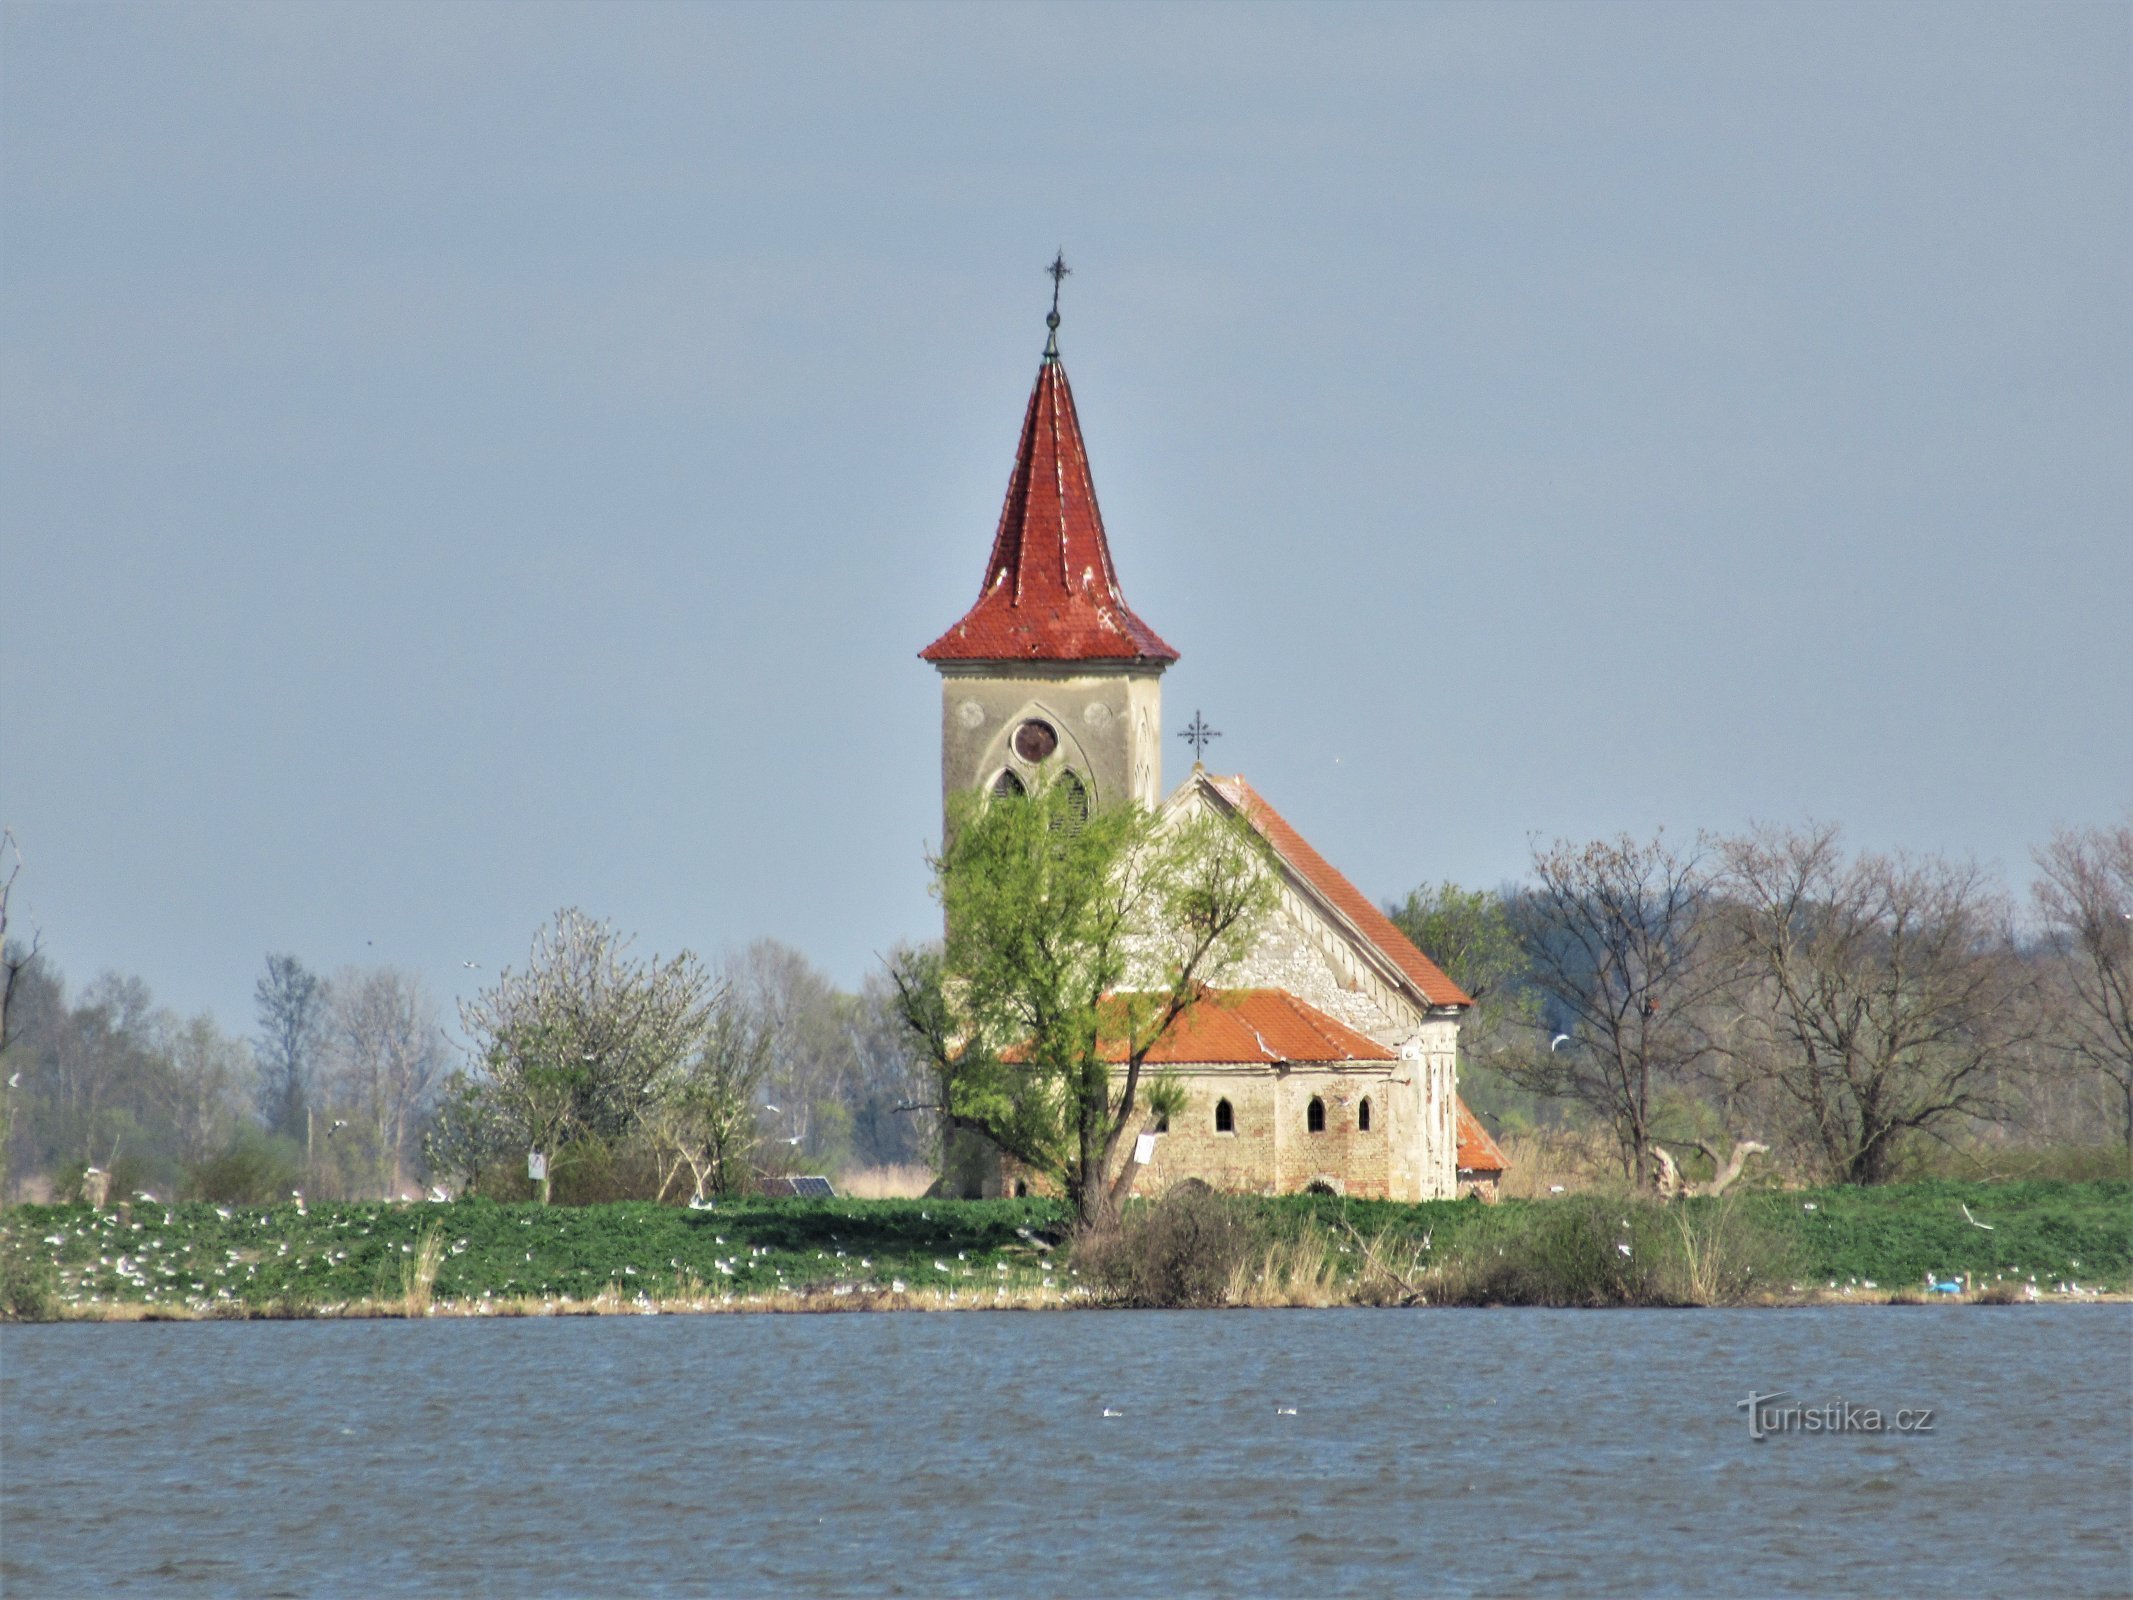 Vista da igreja do mirante